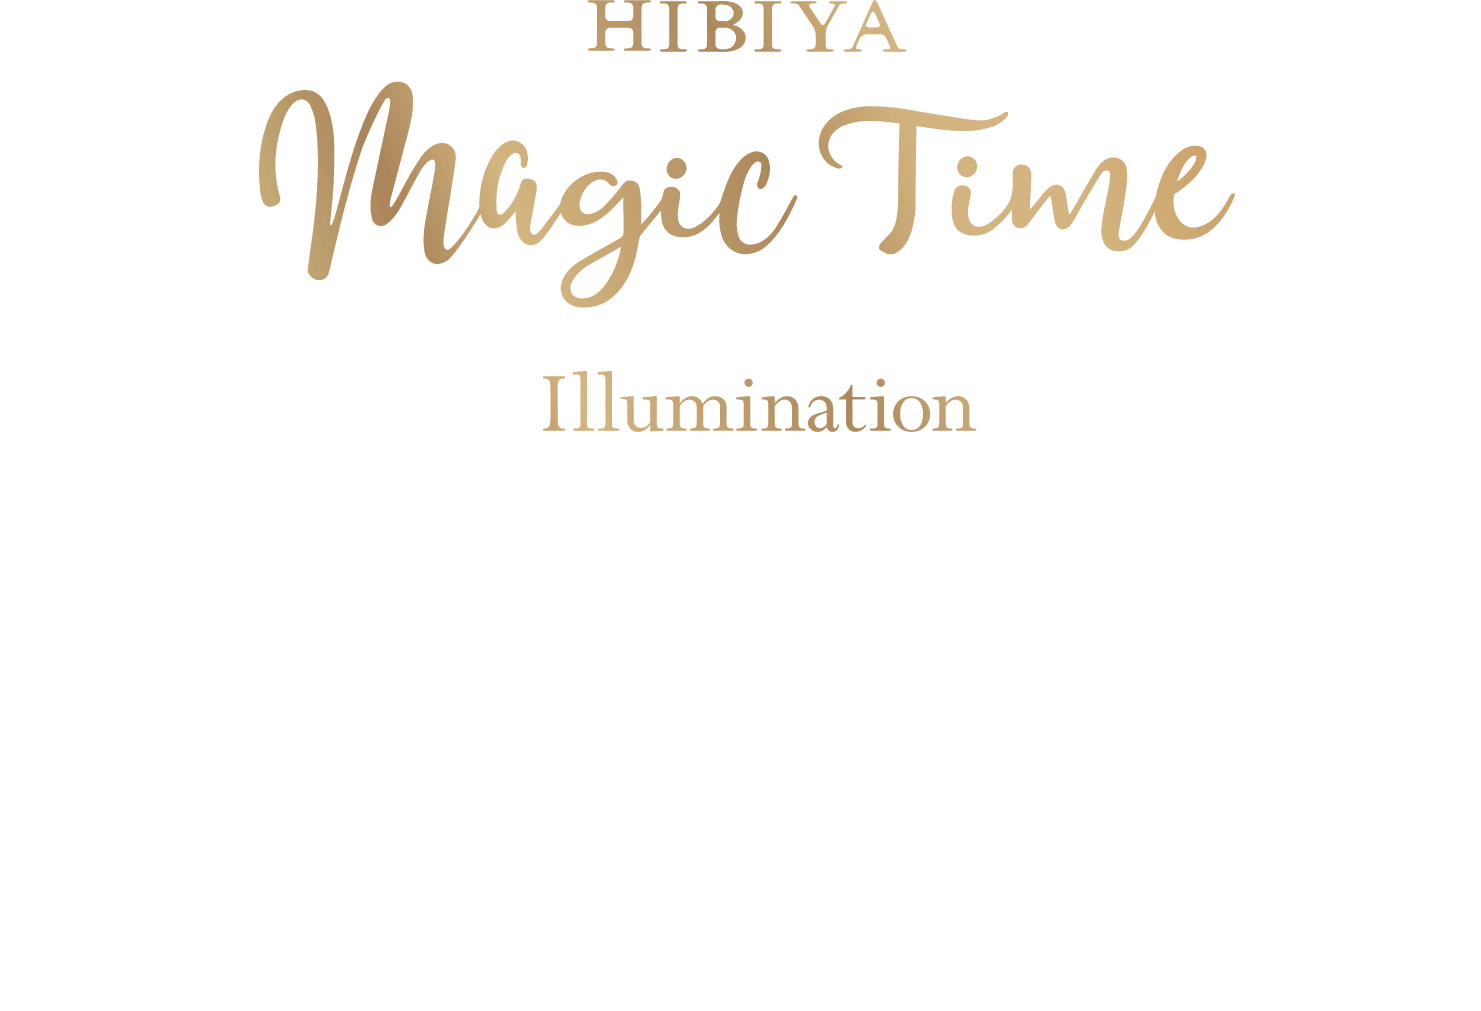 HIBIYA Magic Time Illumination Nov.17(Thu.),2022 toFeb.14(Tue.),2023 Light Up 17:00-23:00 Hibiya Area Management Association,Tokyo Midtown Hibiya,Hibiya Chanter